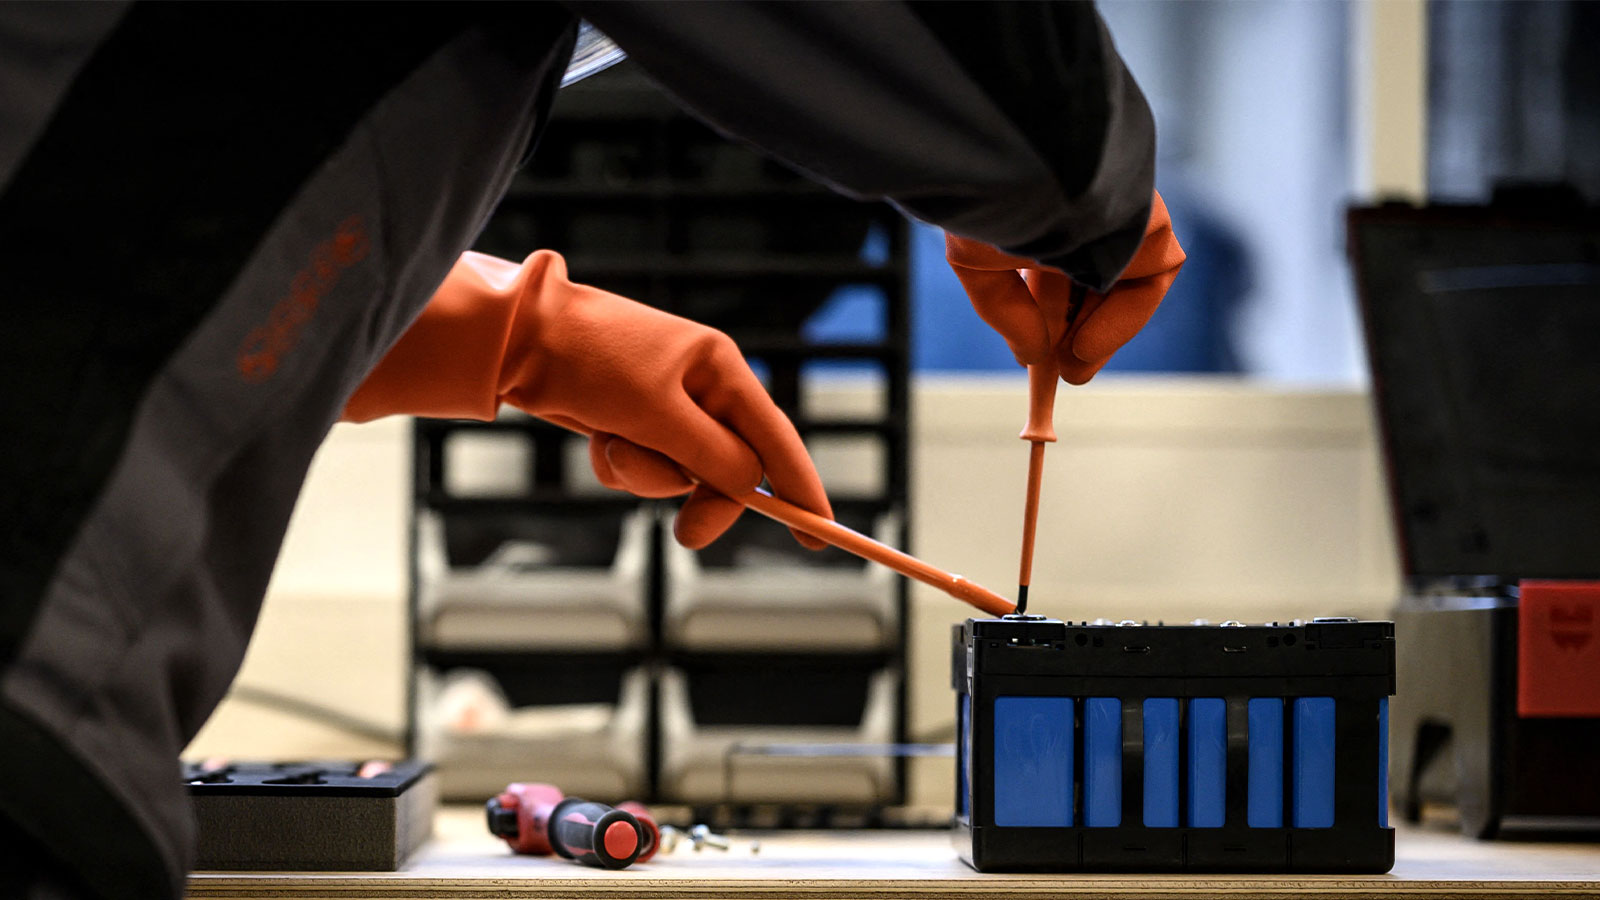 A mechanic wearing orange gloves works on an electric car's battery module